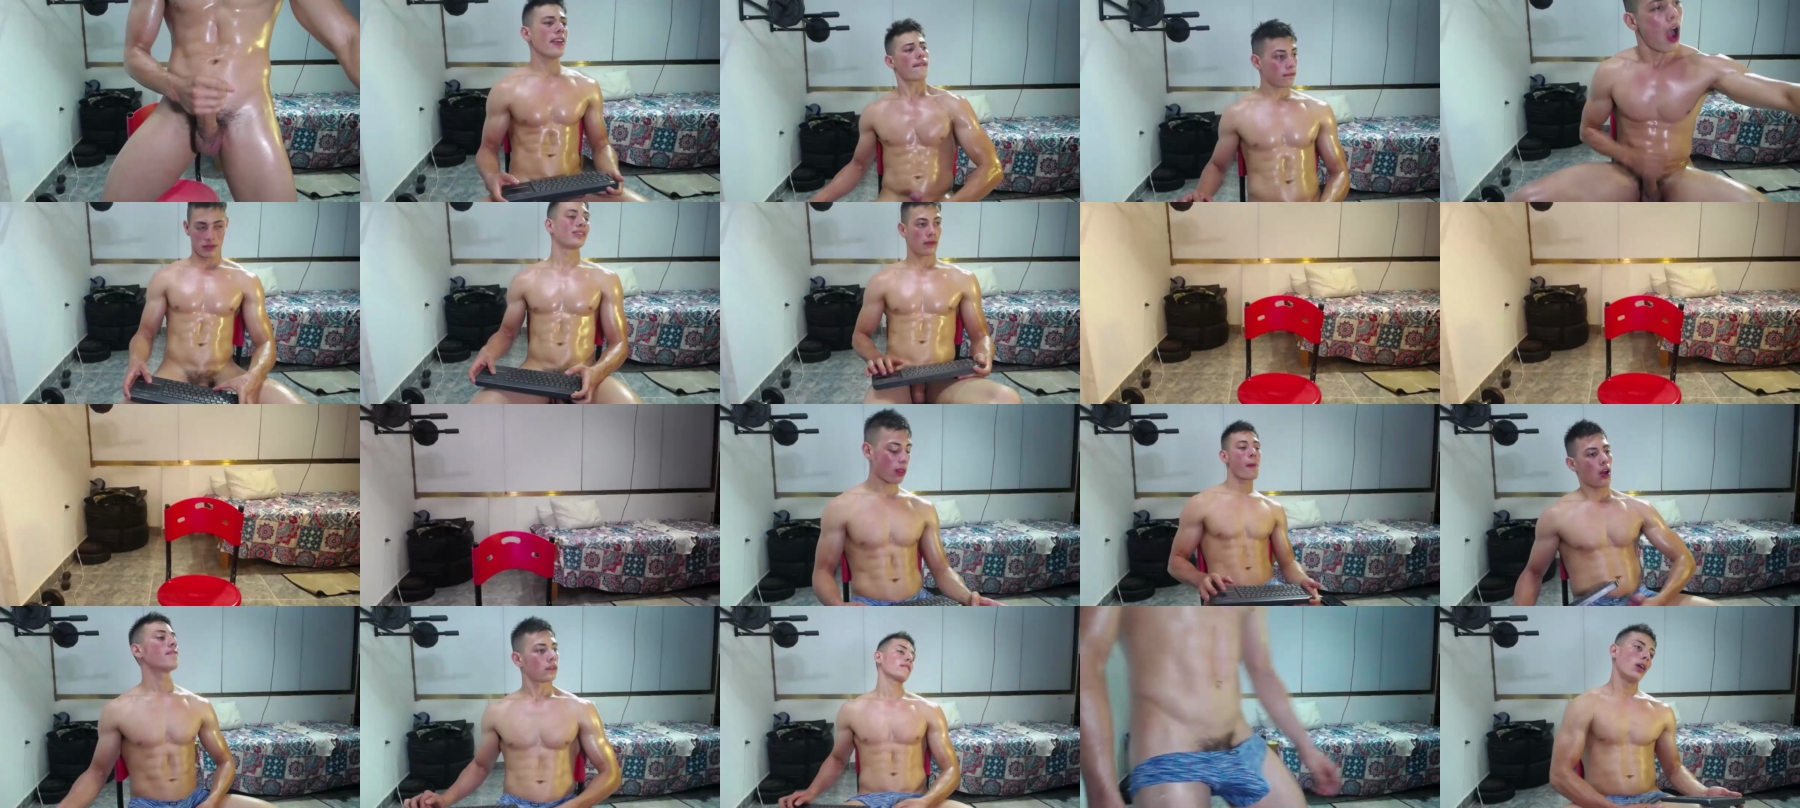 Nick_Zackk  05-10-2021 Male Naked